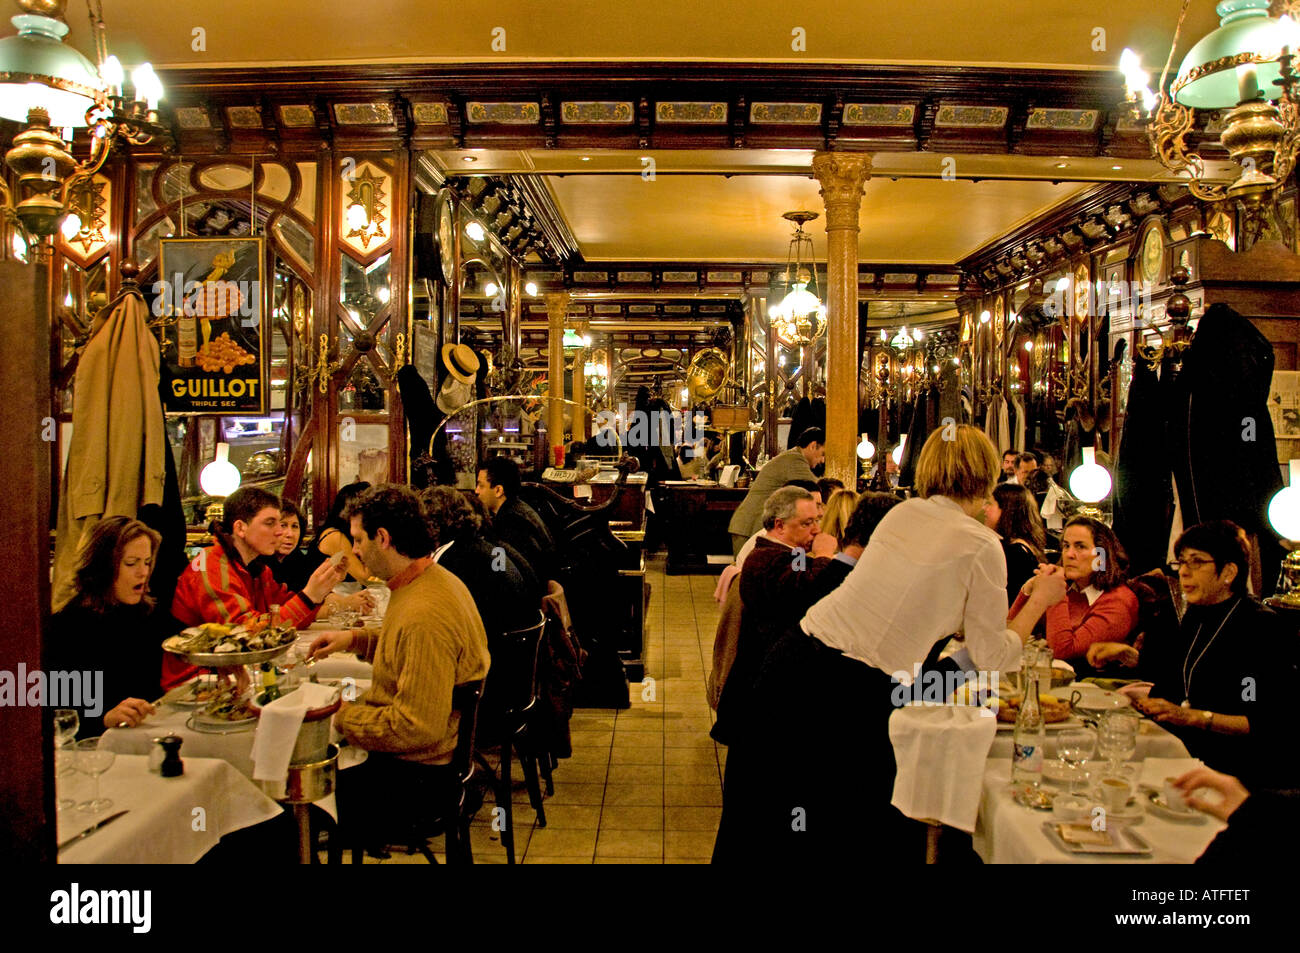 Restaurant Vagenende Saint Germain Paris France Stock Photo